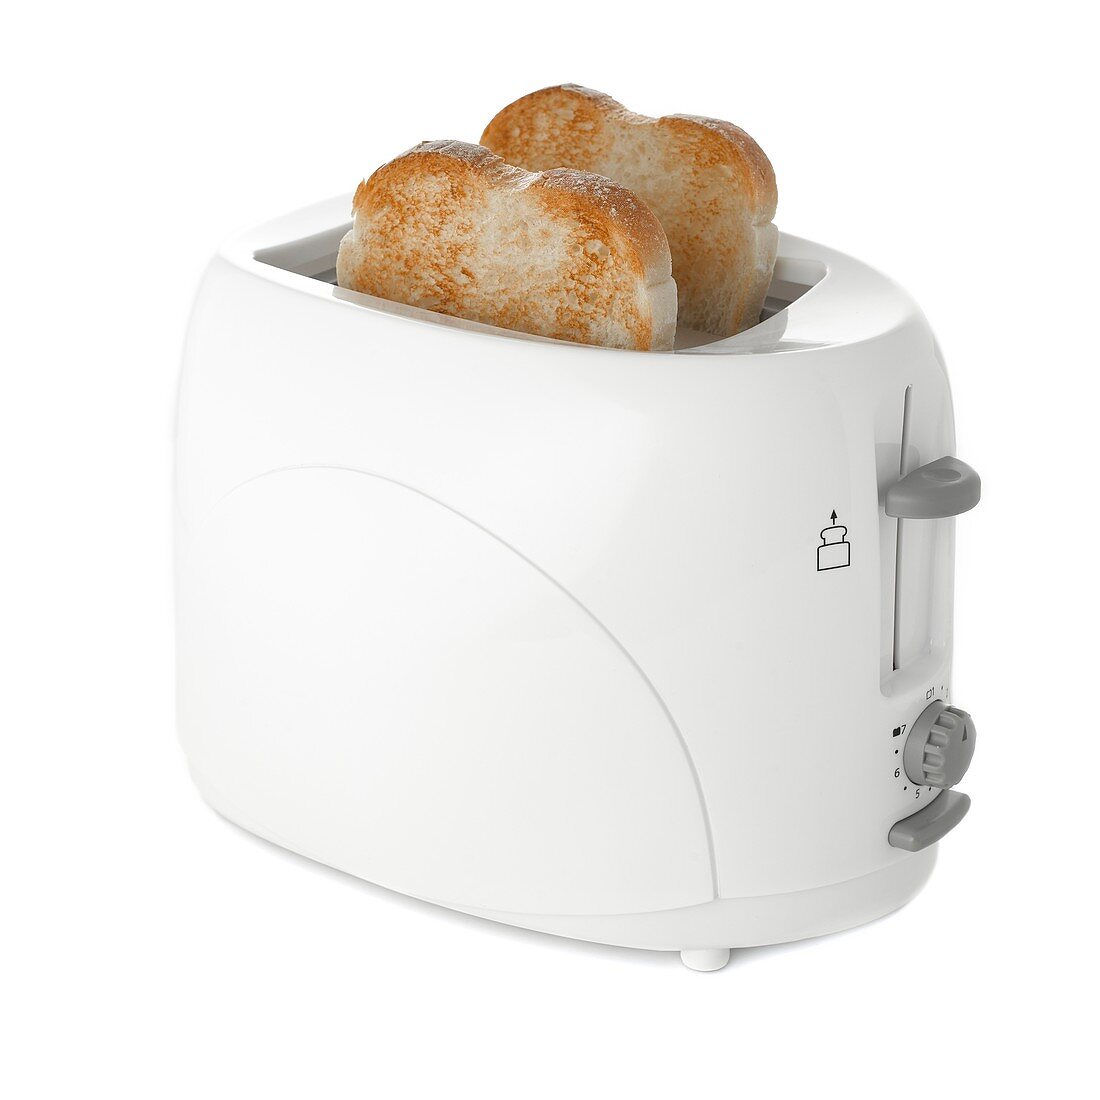 Toaster with toast